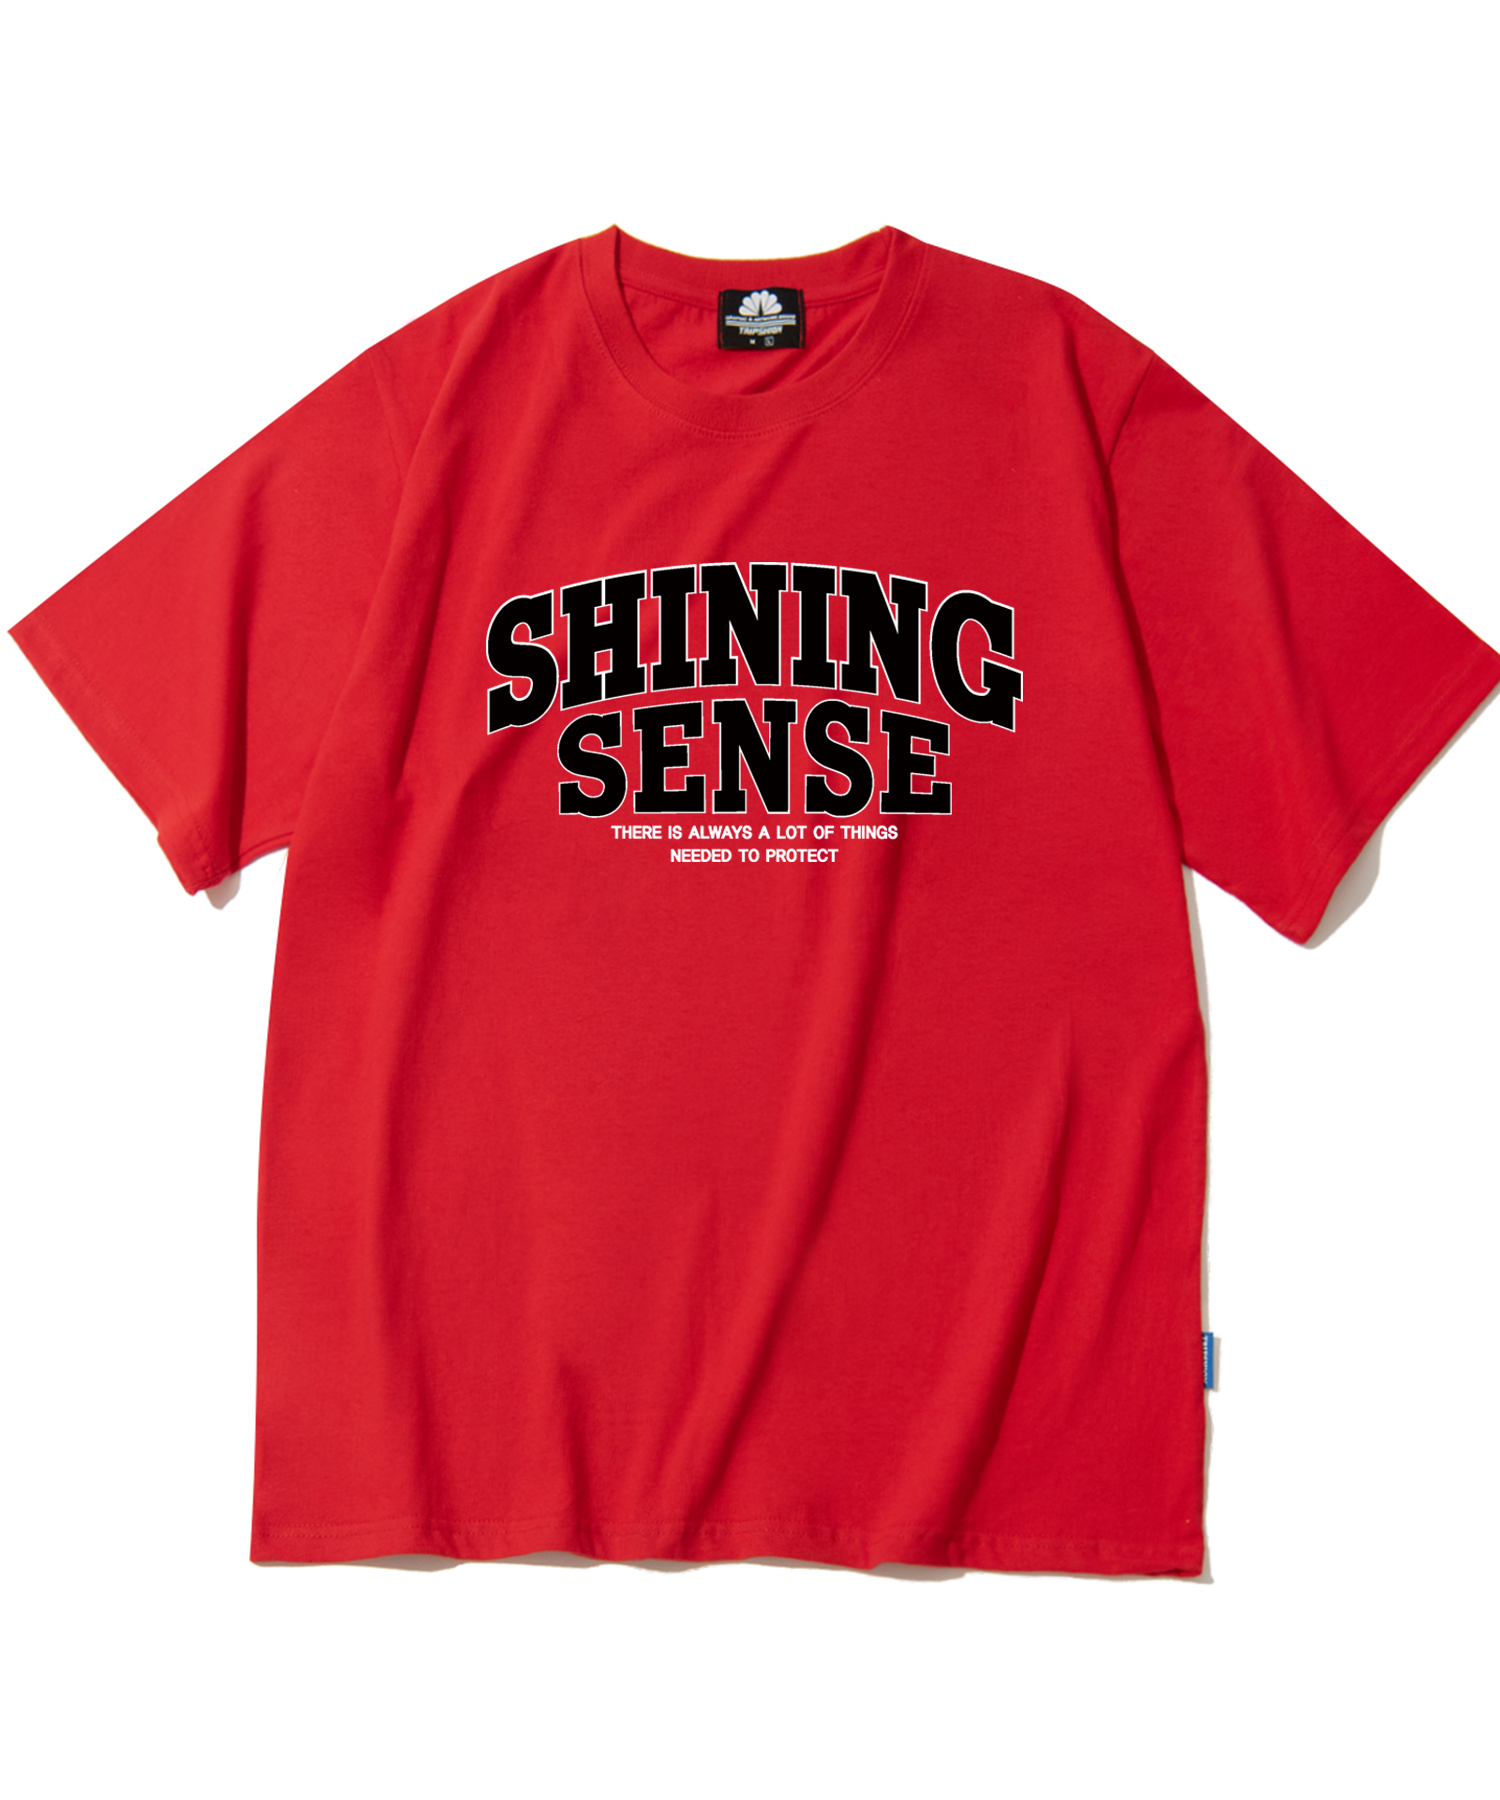 SHINING SENSE VARSITY LOGO T-SHIRTS - RED